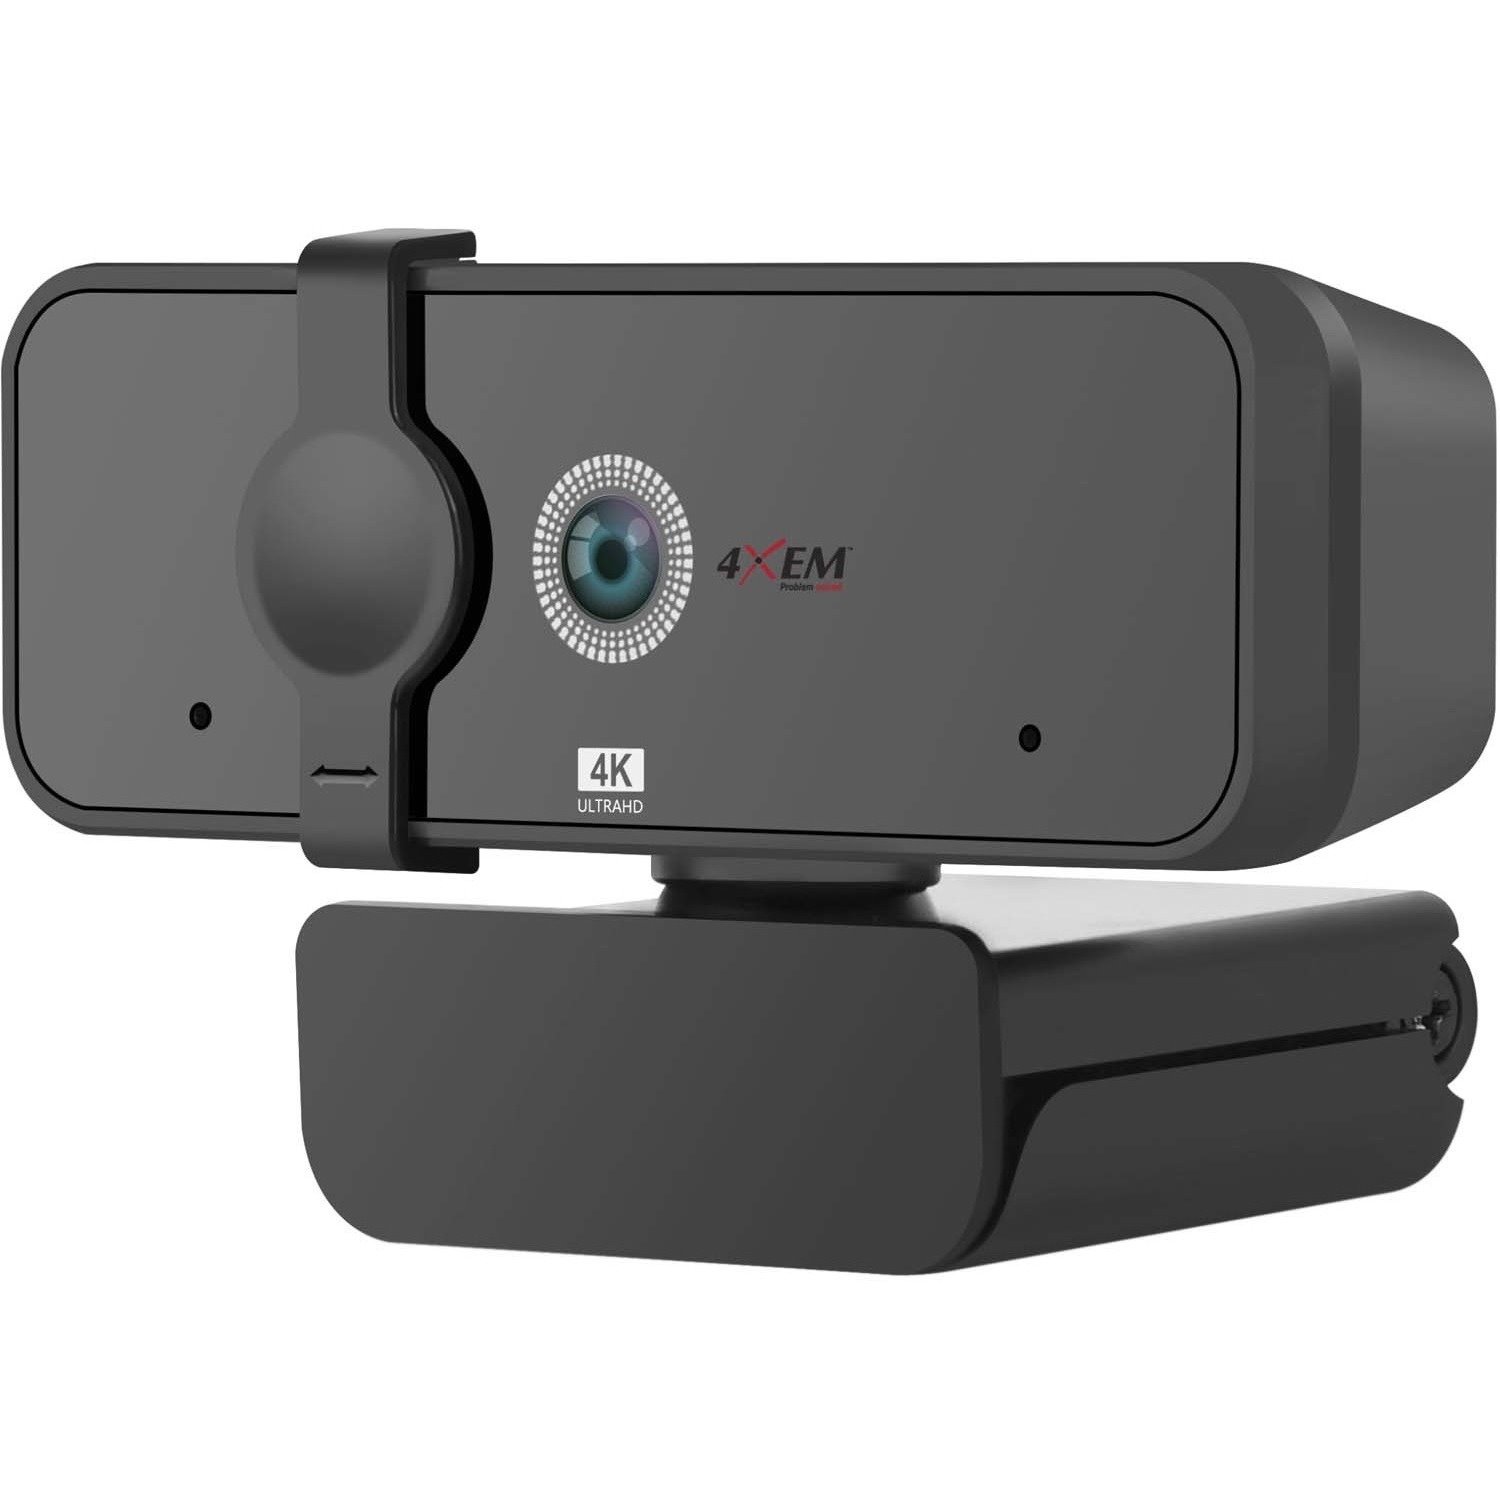 4XEM Webcam - 3 Megapixel - 30 fps - Black - USB 2.0 Type A